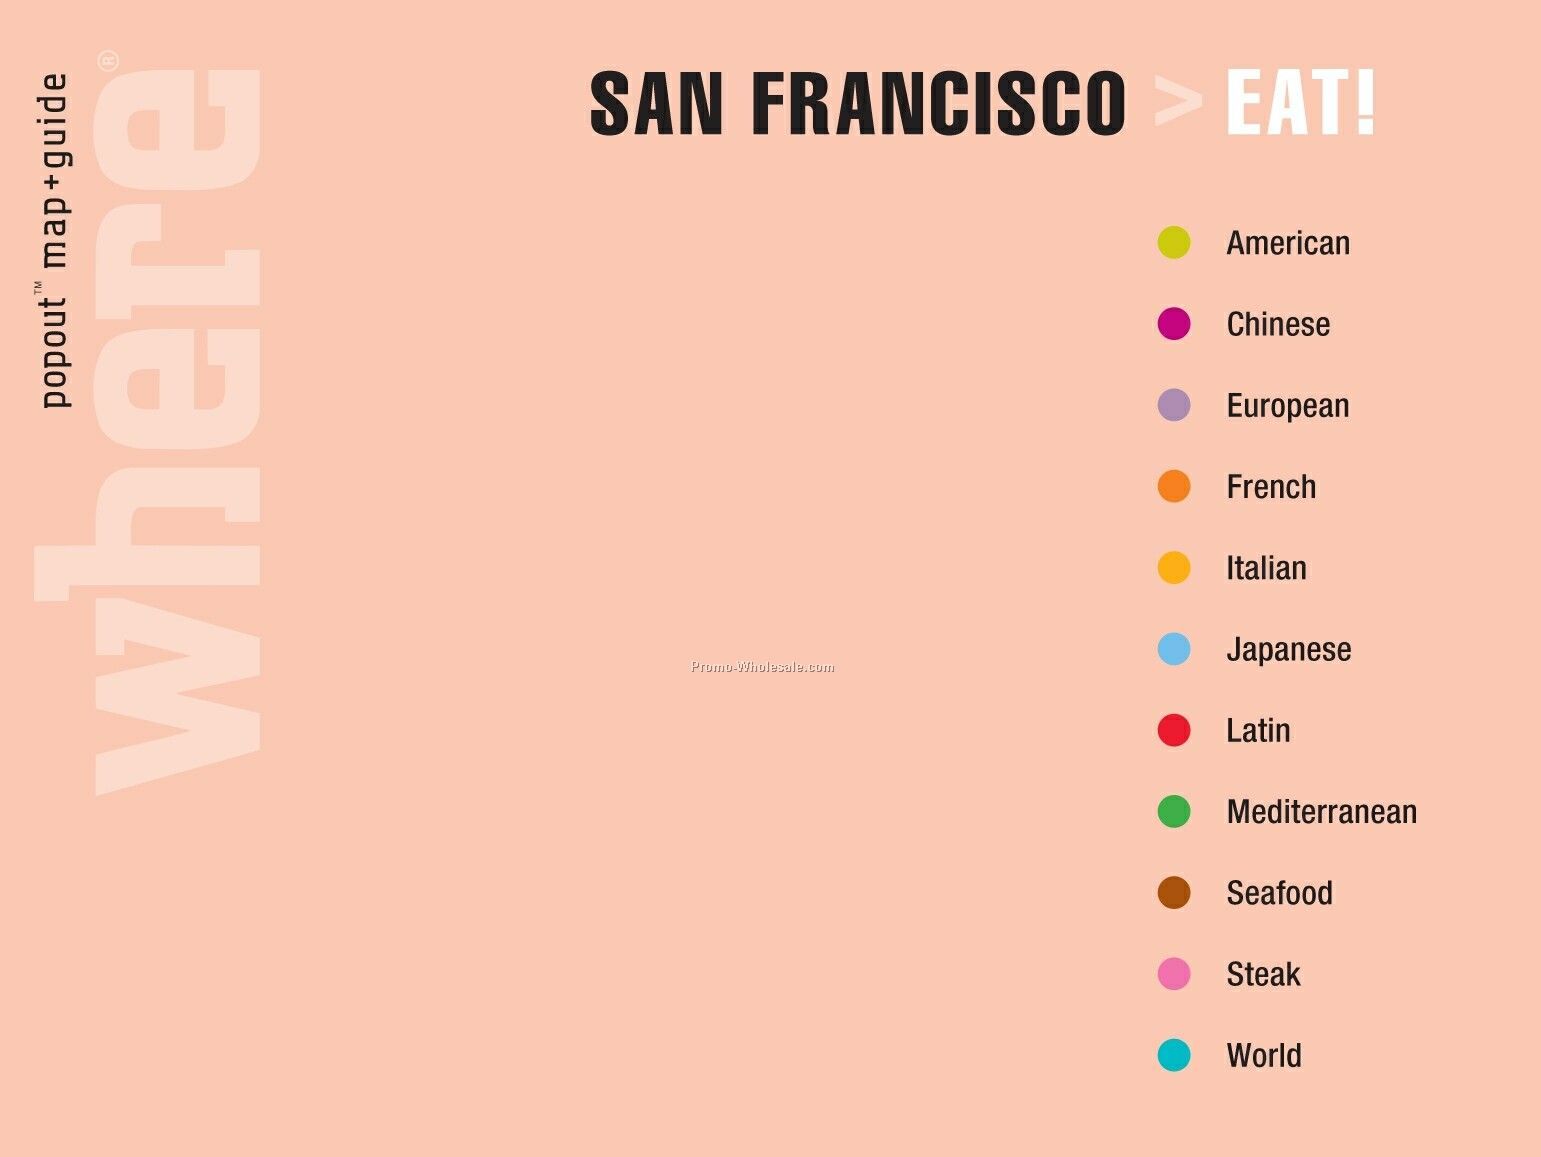 Restaurant Guides - Featuring Popout Maps - Eat! San Francisco